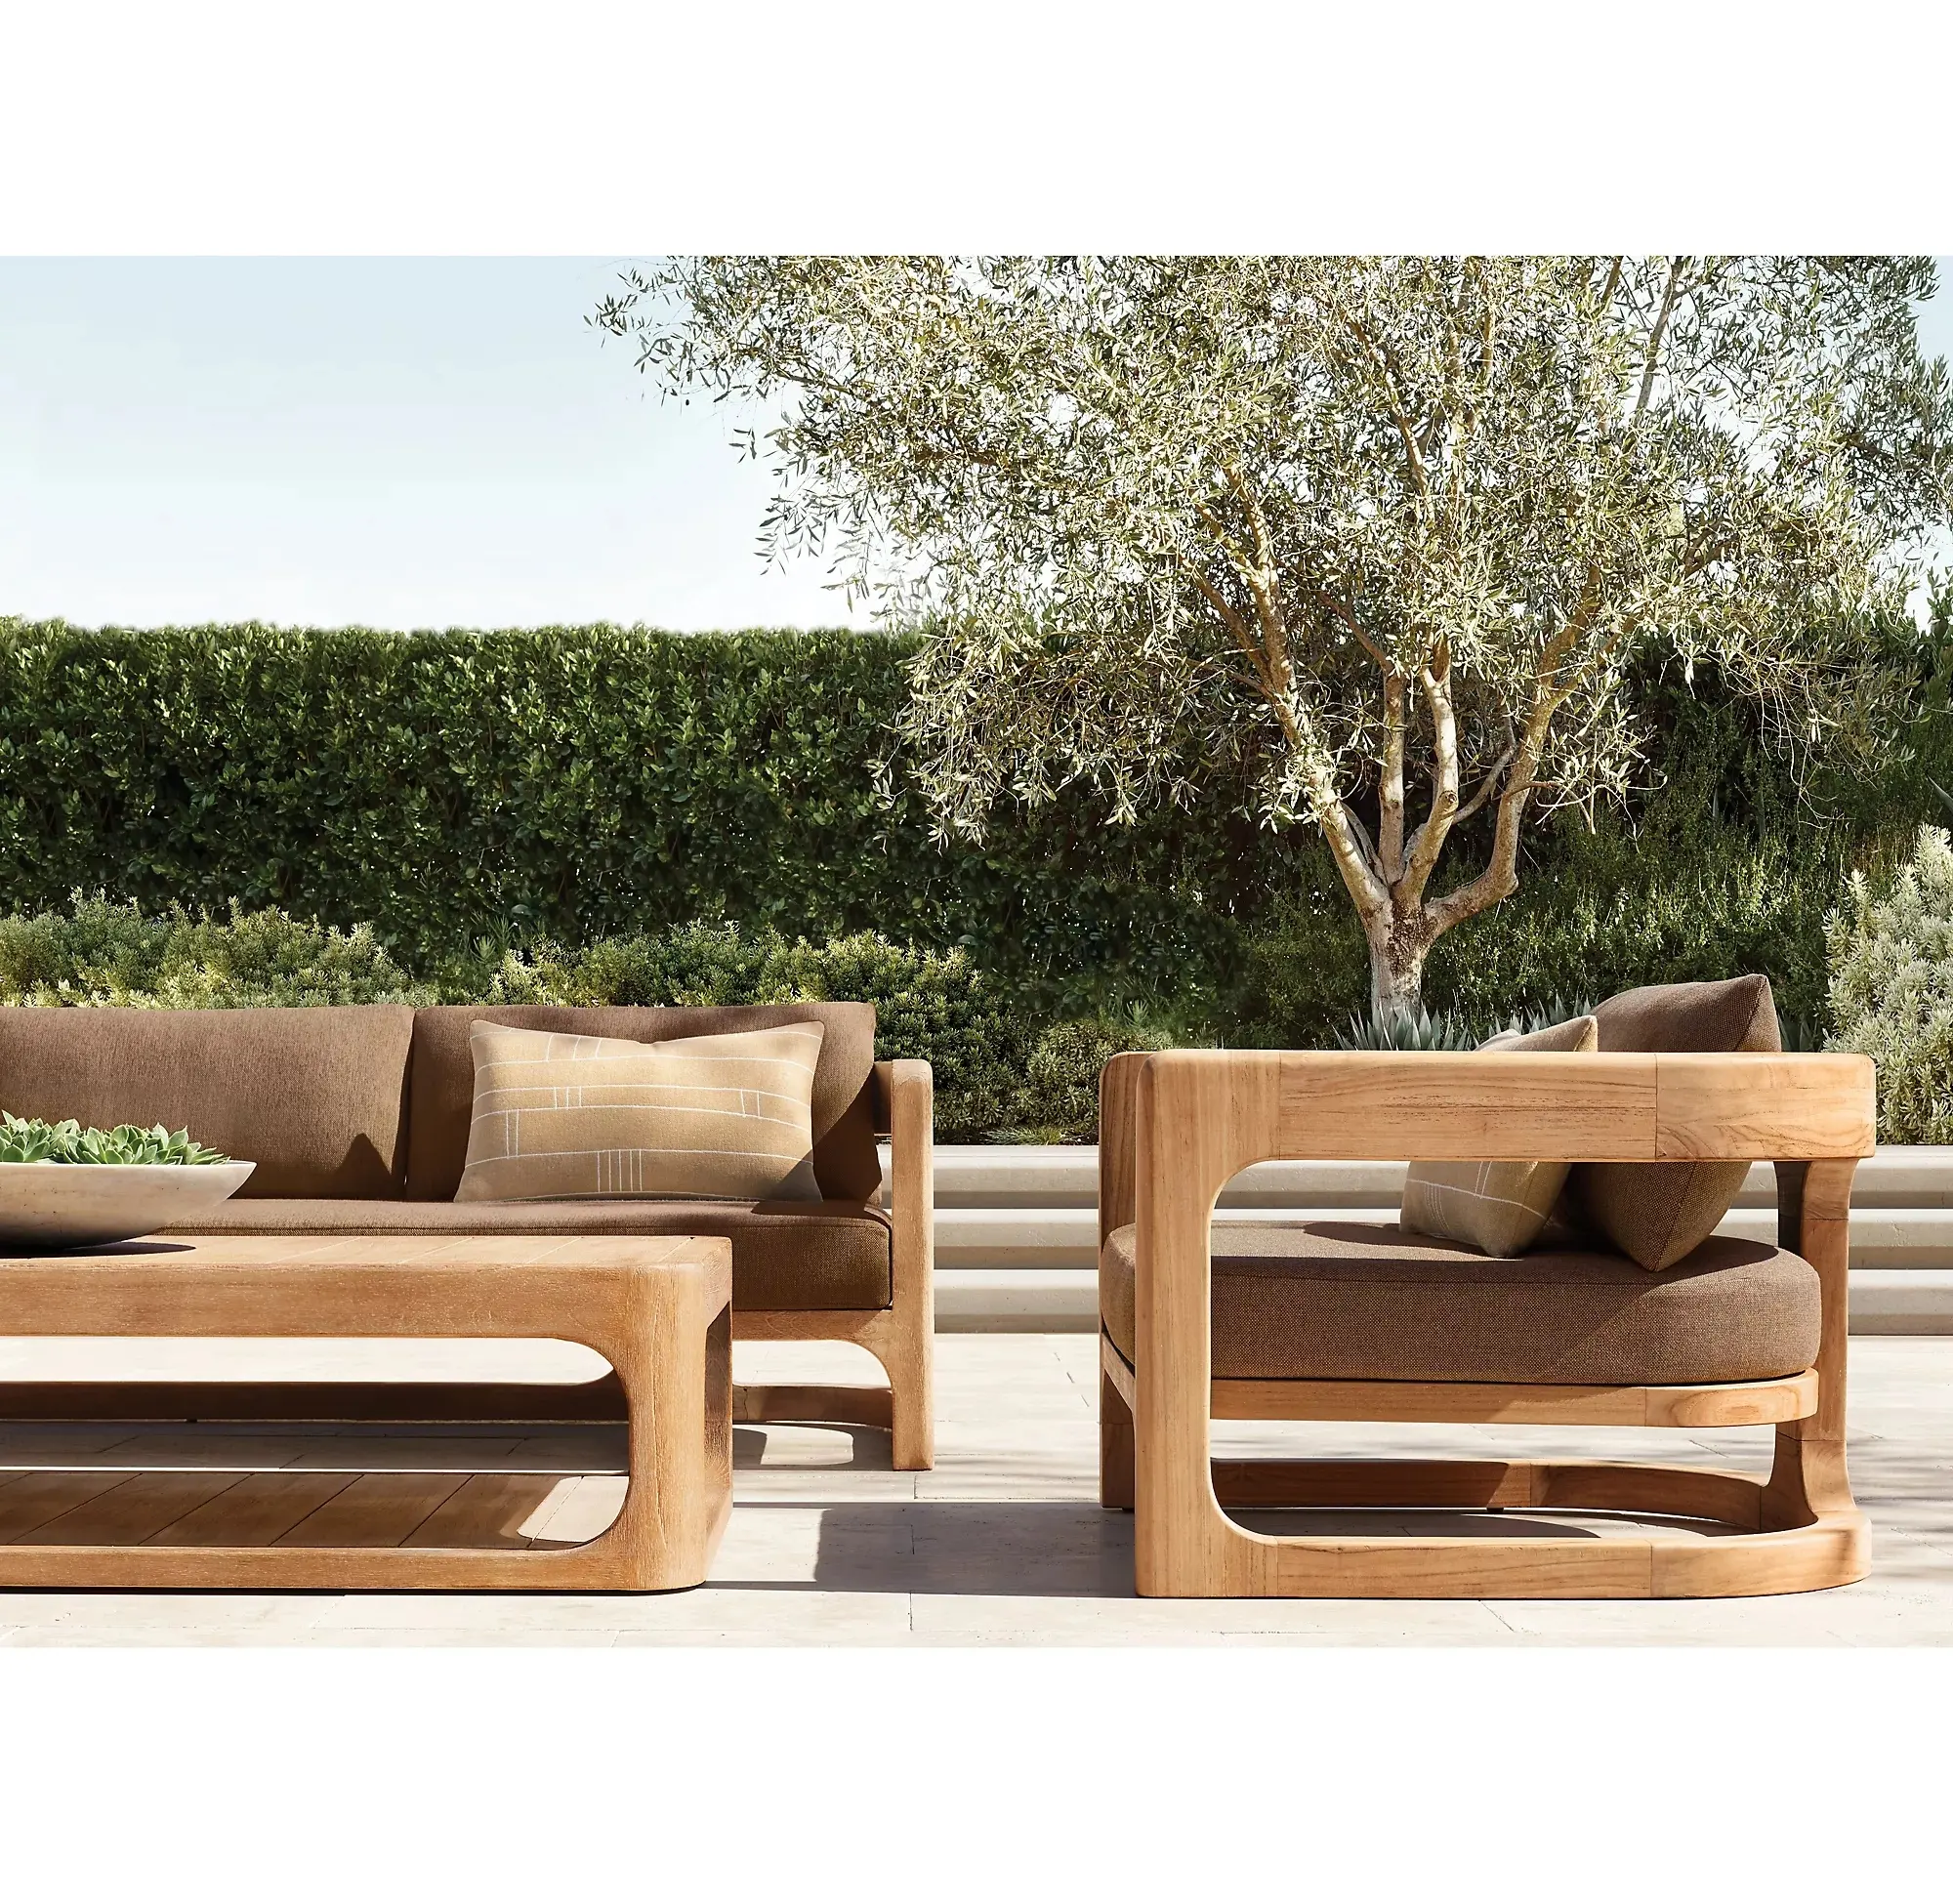 Luxury outdoor teak patio garden dining table with teak sofa set